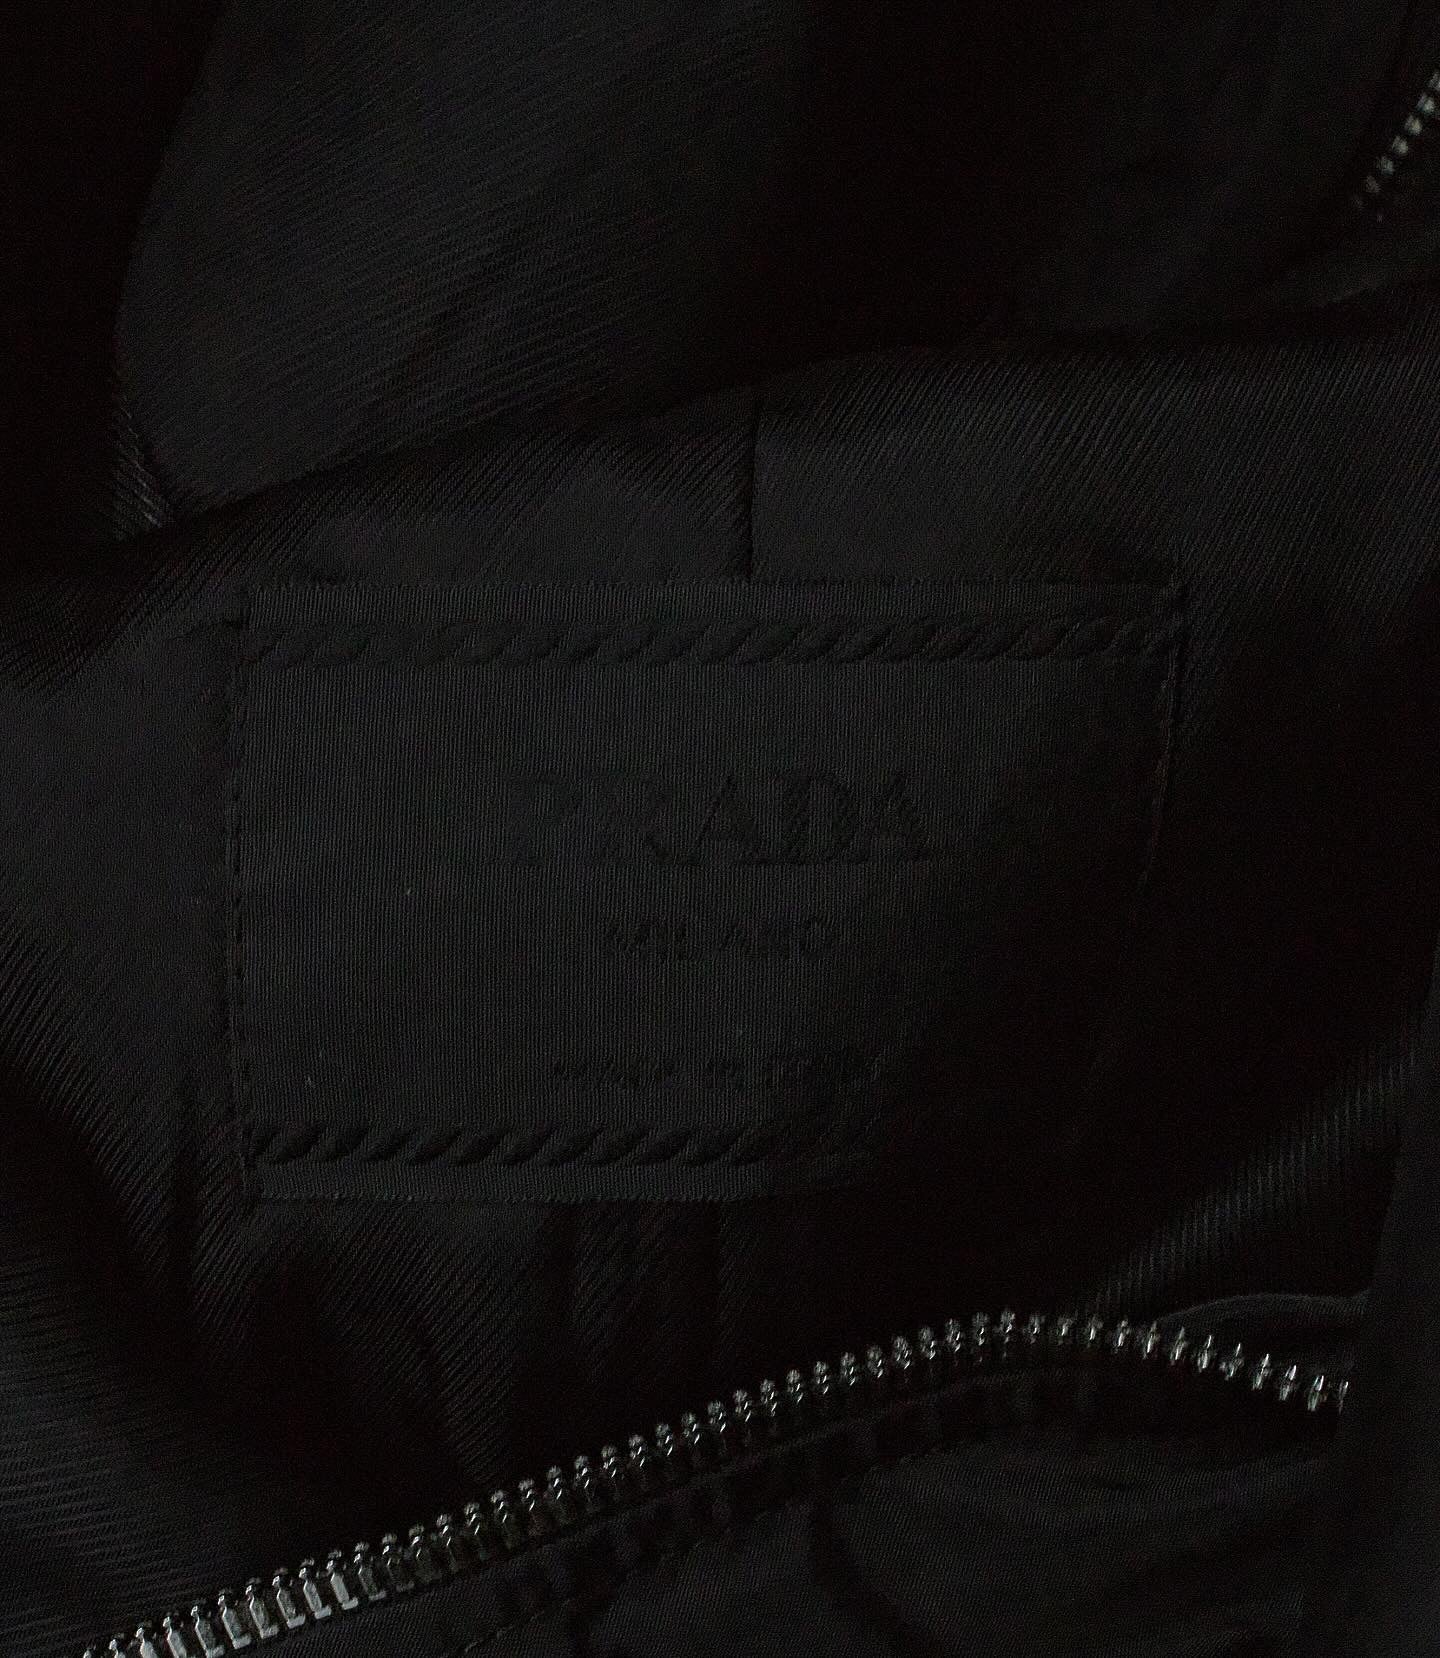 Prada Late 90s Convertible 2-in-1 Leather Nylon Liner Vest Work Jacket